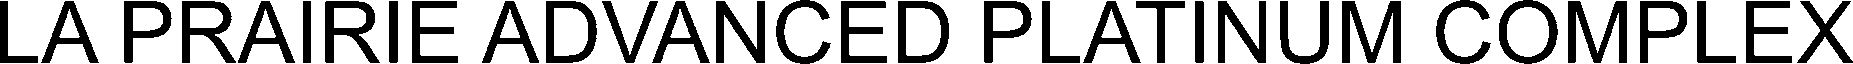 Trademark Logo LA PRAIRIE ADVANCED PLATINUM COMPLEX